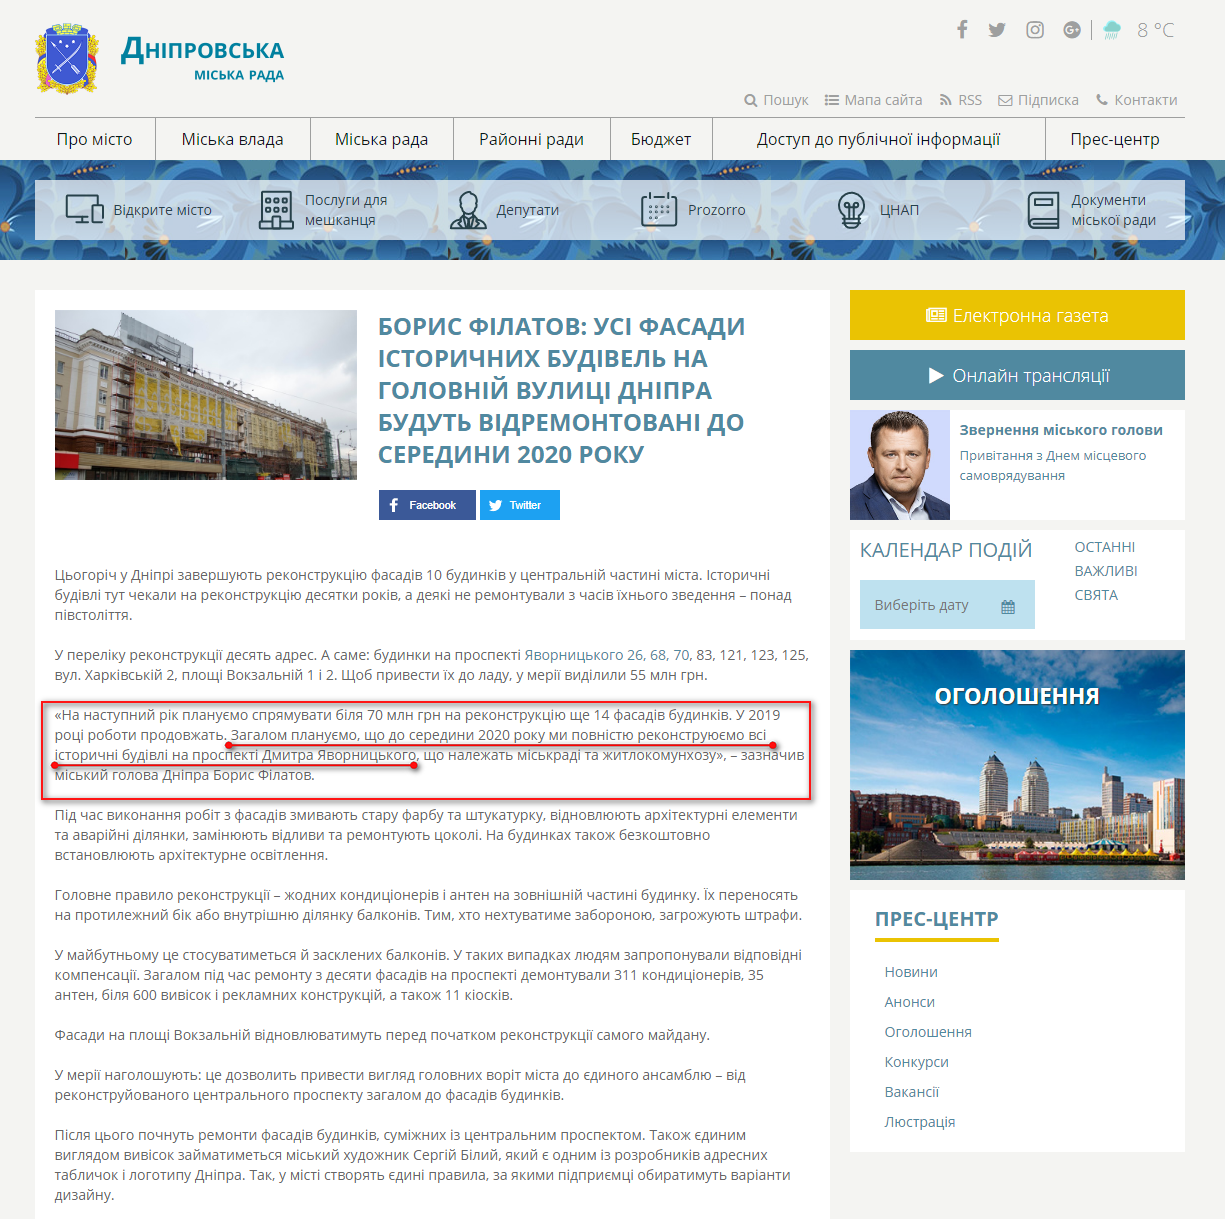 https://dniprorada.gov.ua/uk/articles/item/22954/boris-filatov-usi-fasadi-istorichnih-budivel-na-golovnij-vulici-dnipra-budut-vidremontovani-do-seredini-2020-roku-